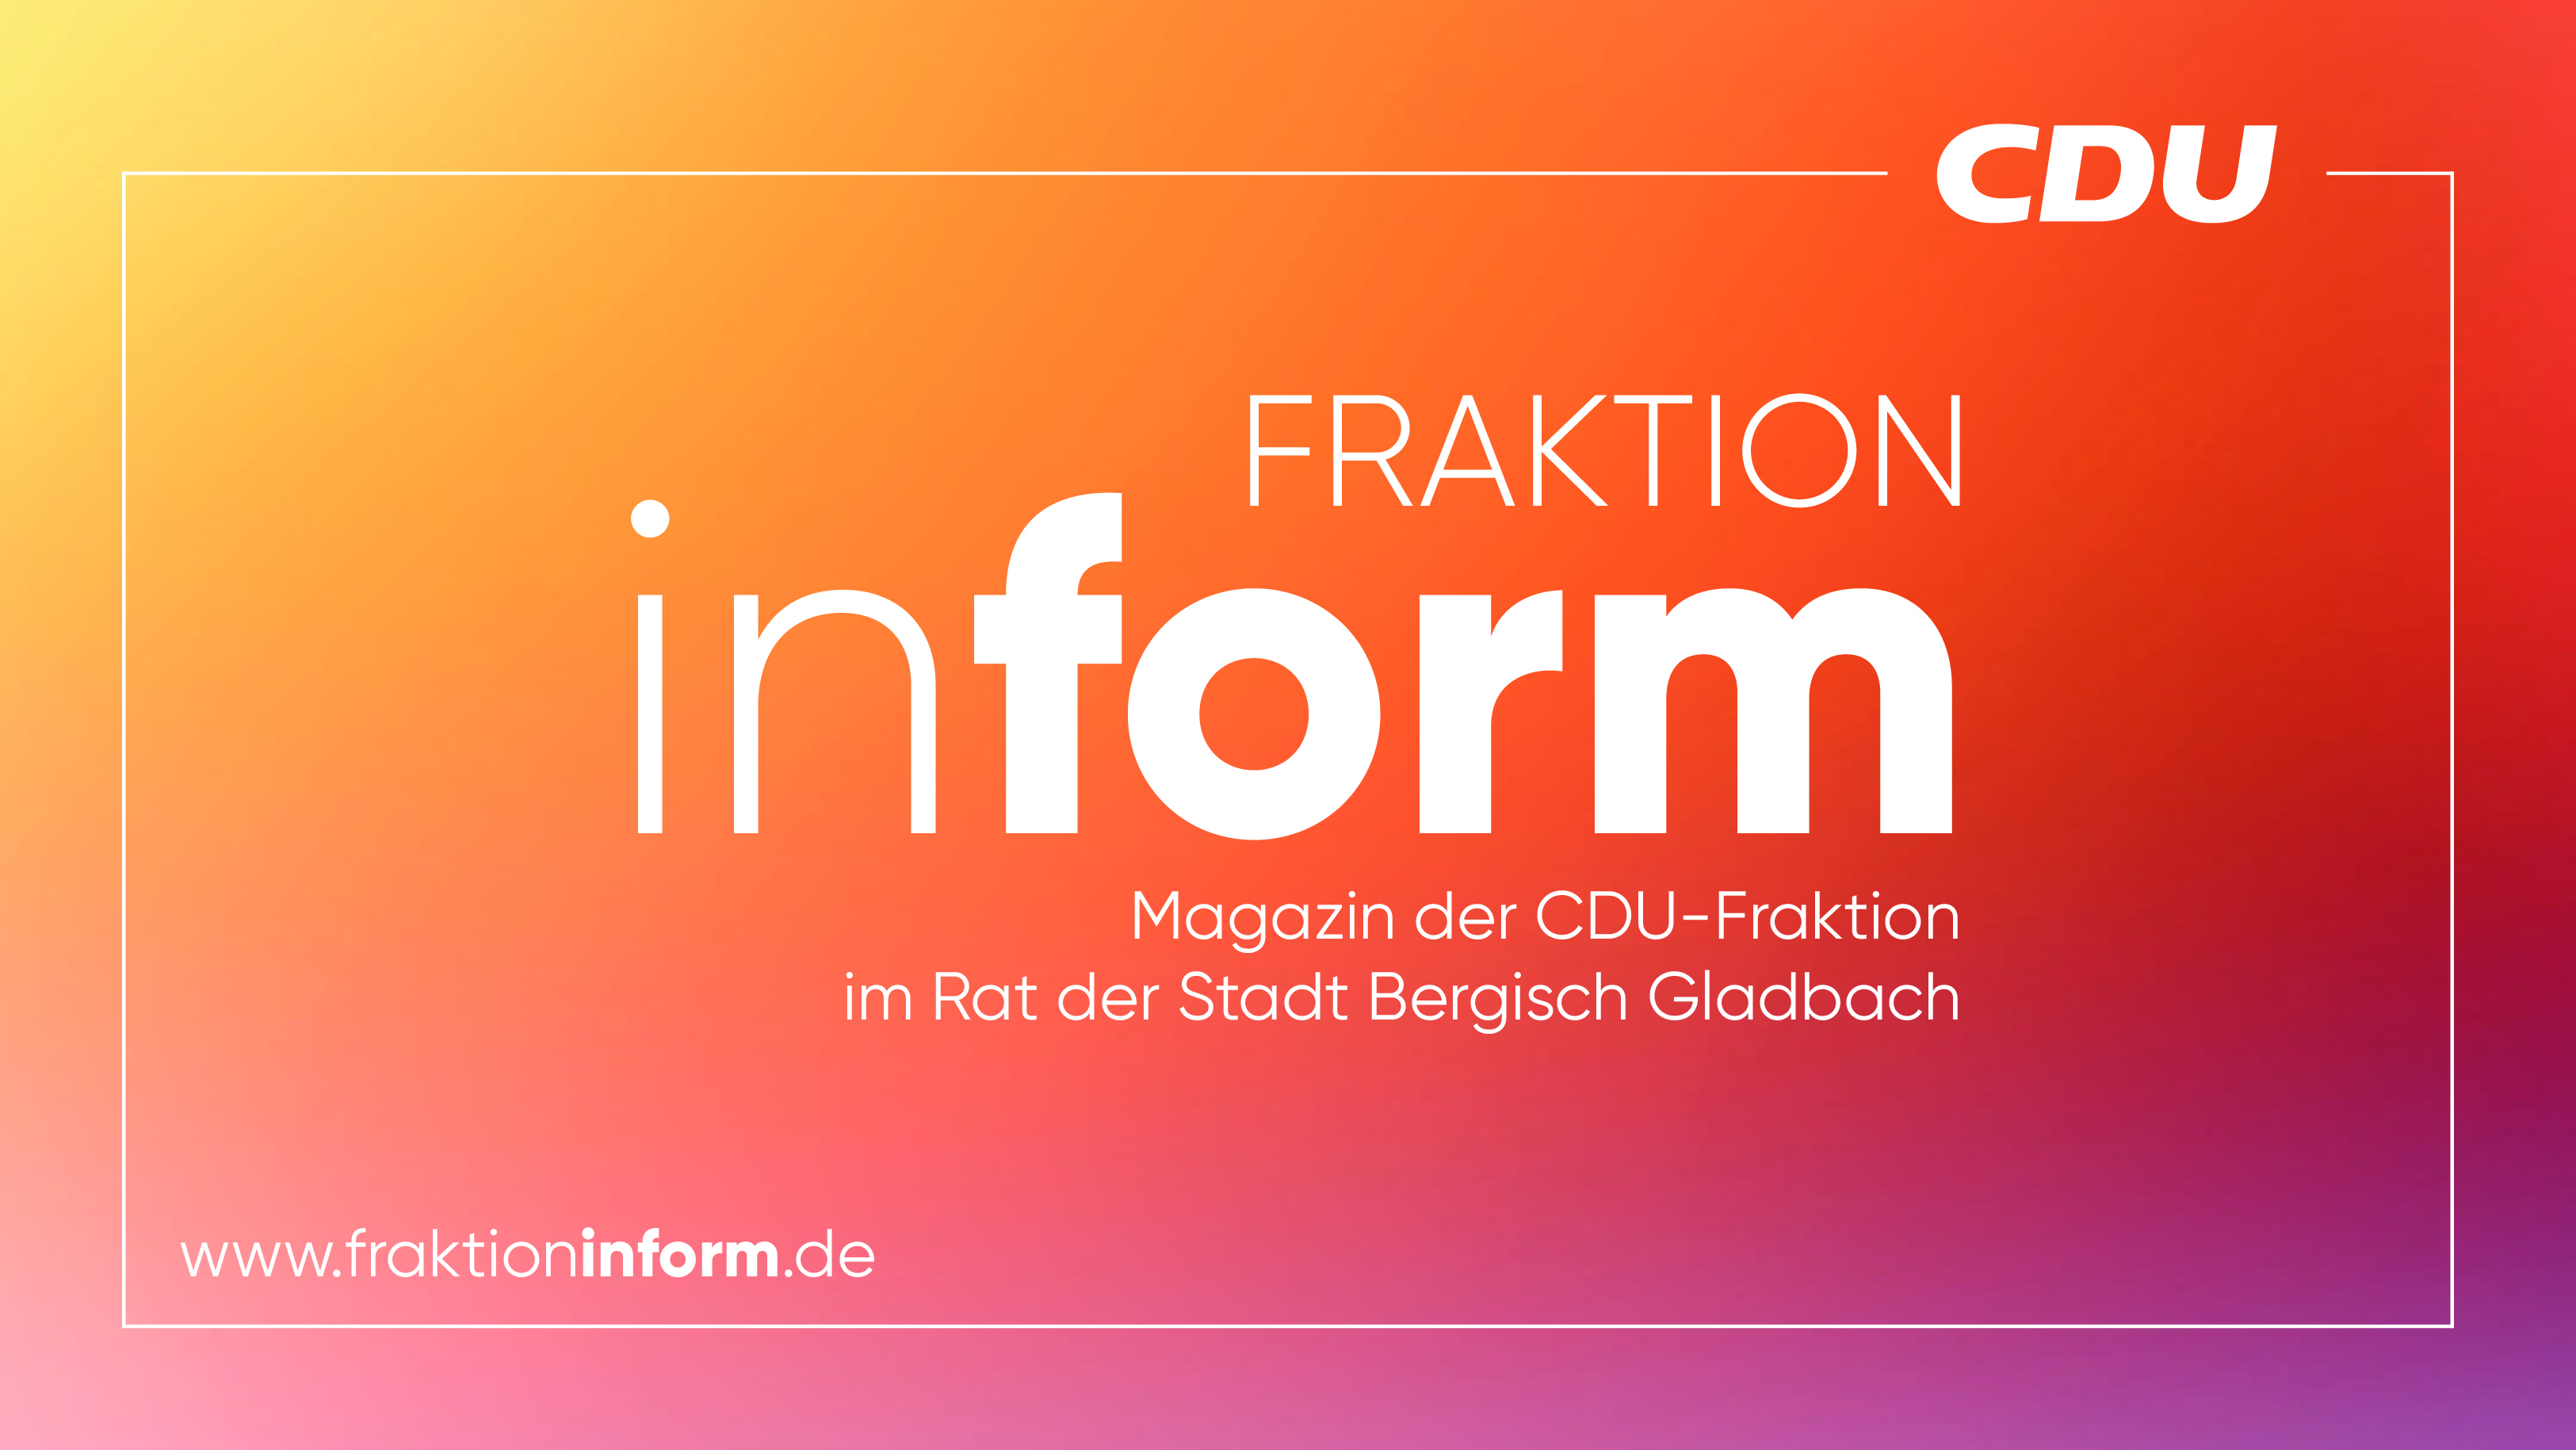 www.fraktioninform.de